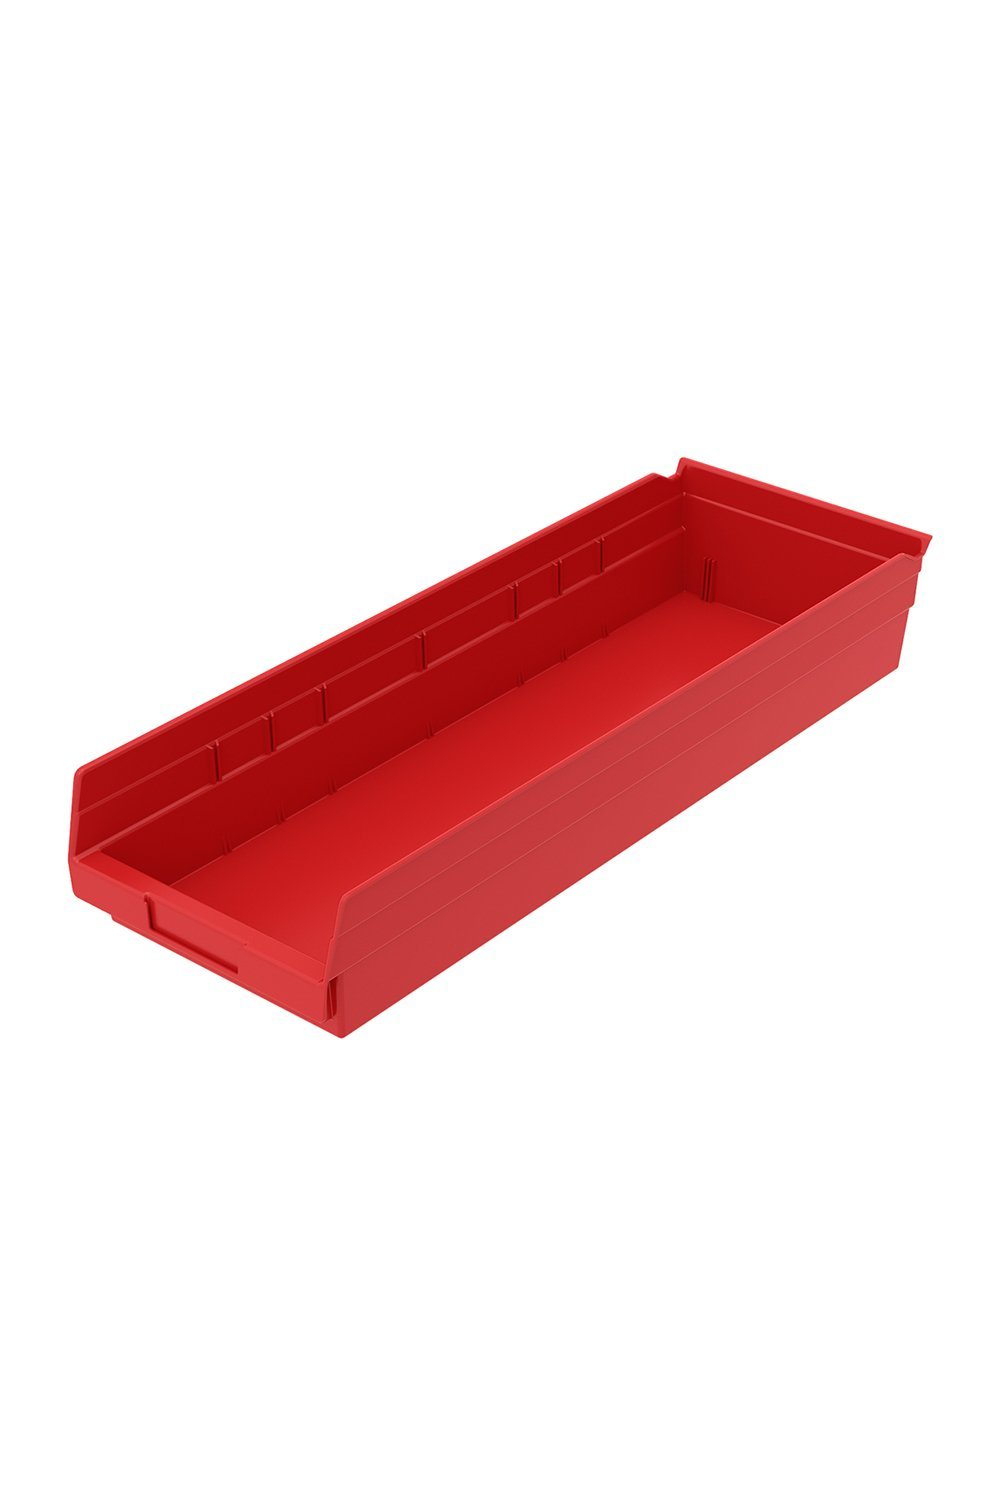 Shelf Bin for 24"D Shelves Bins & Containers Acart 23-5/8'' x 8-3/8'' x 4'' Red 